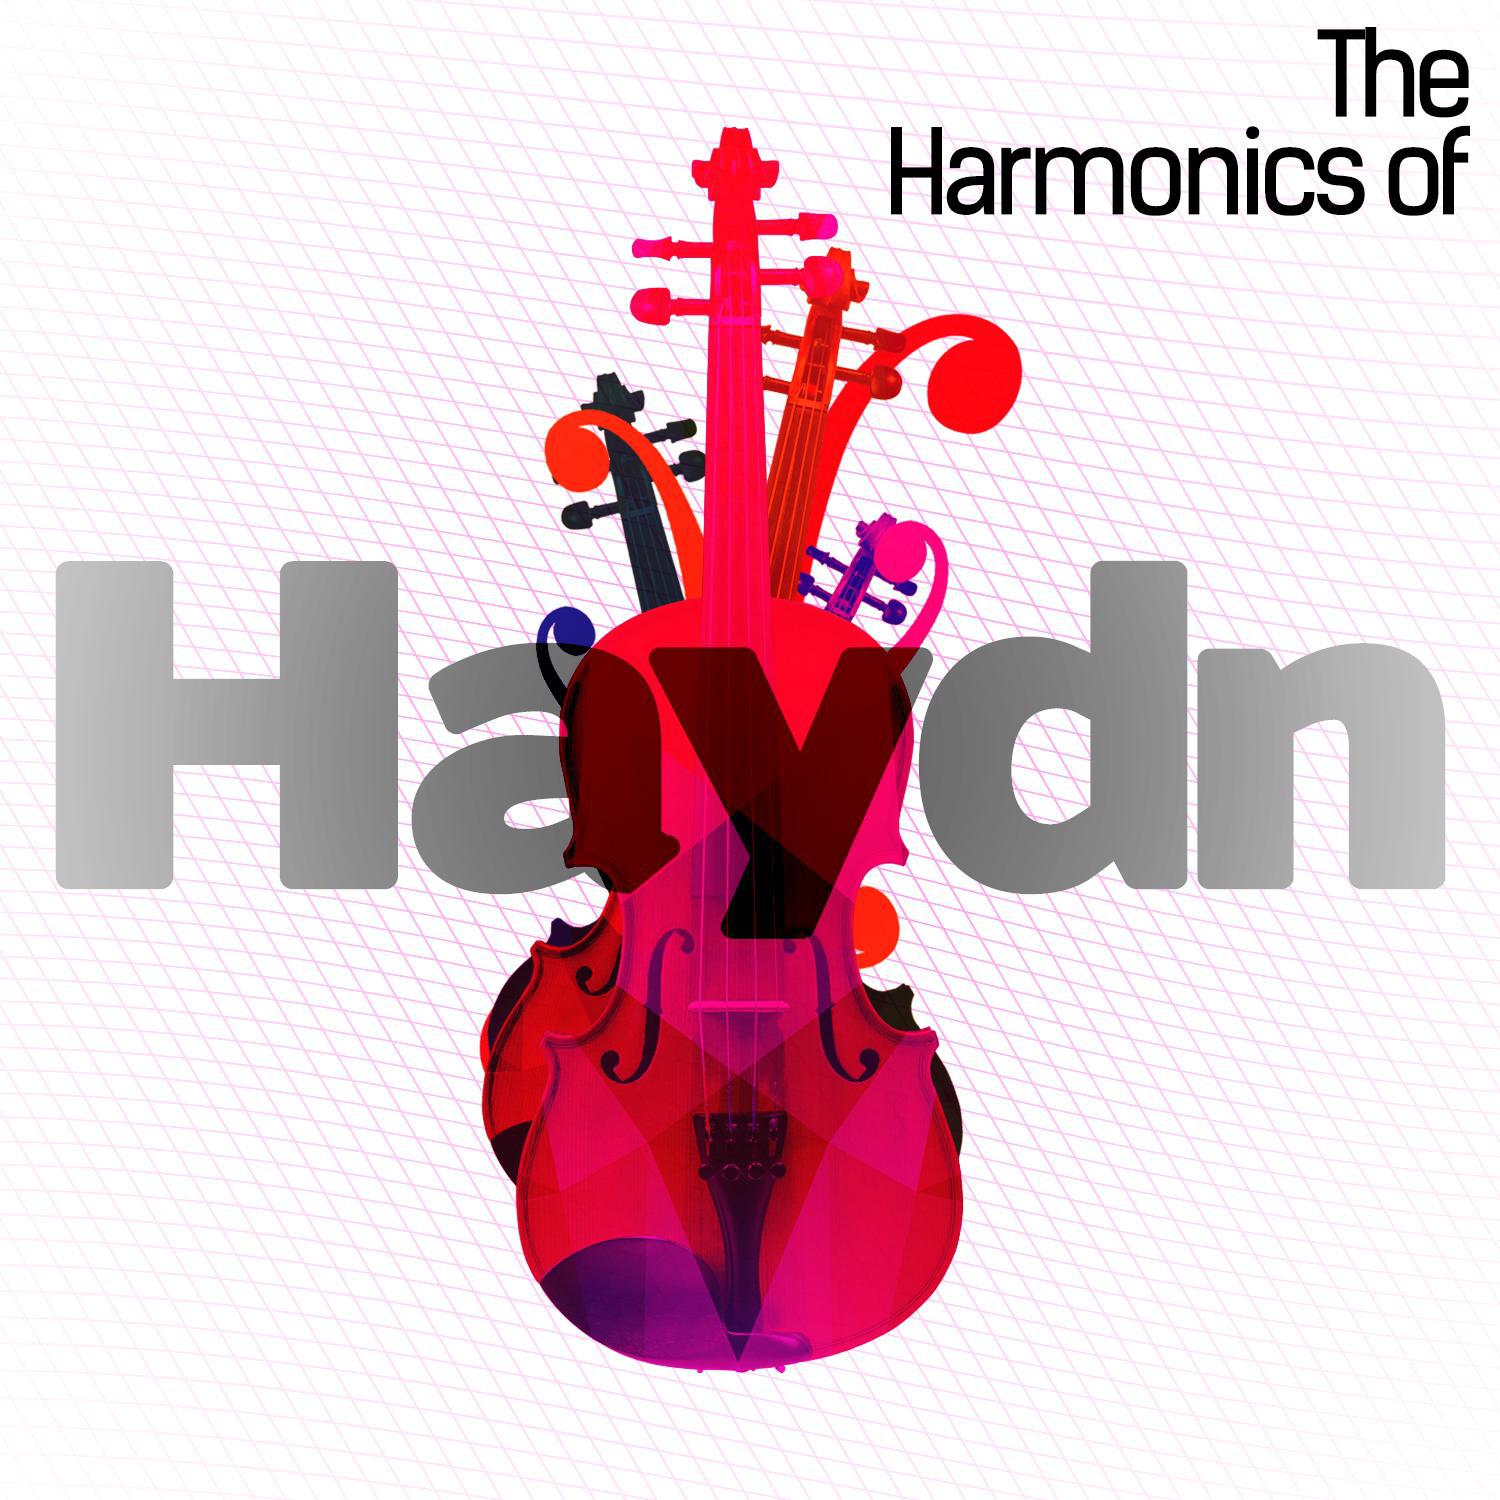 The Harmonics of Haydn